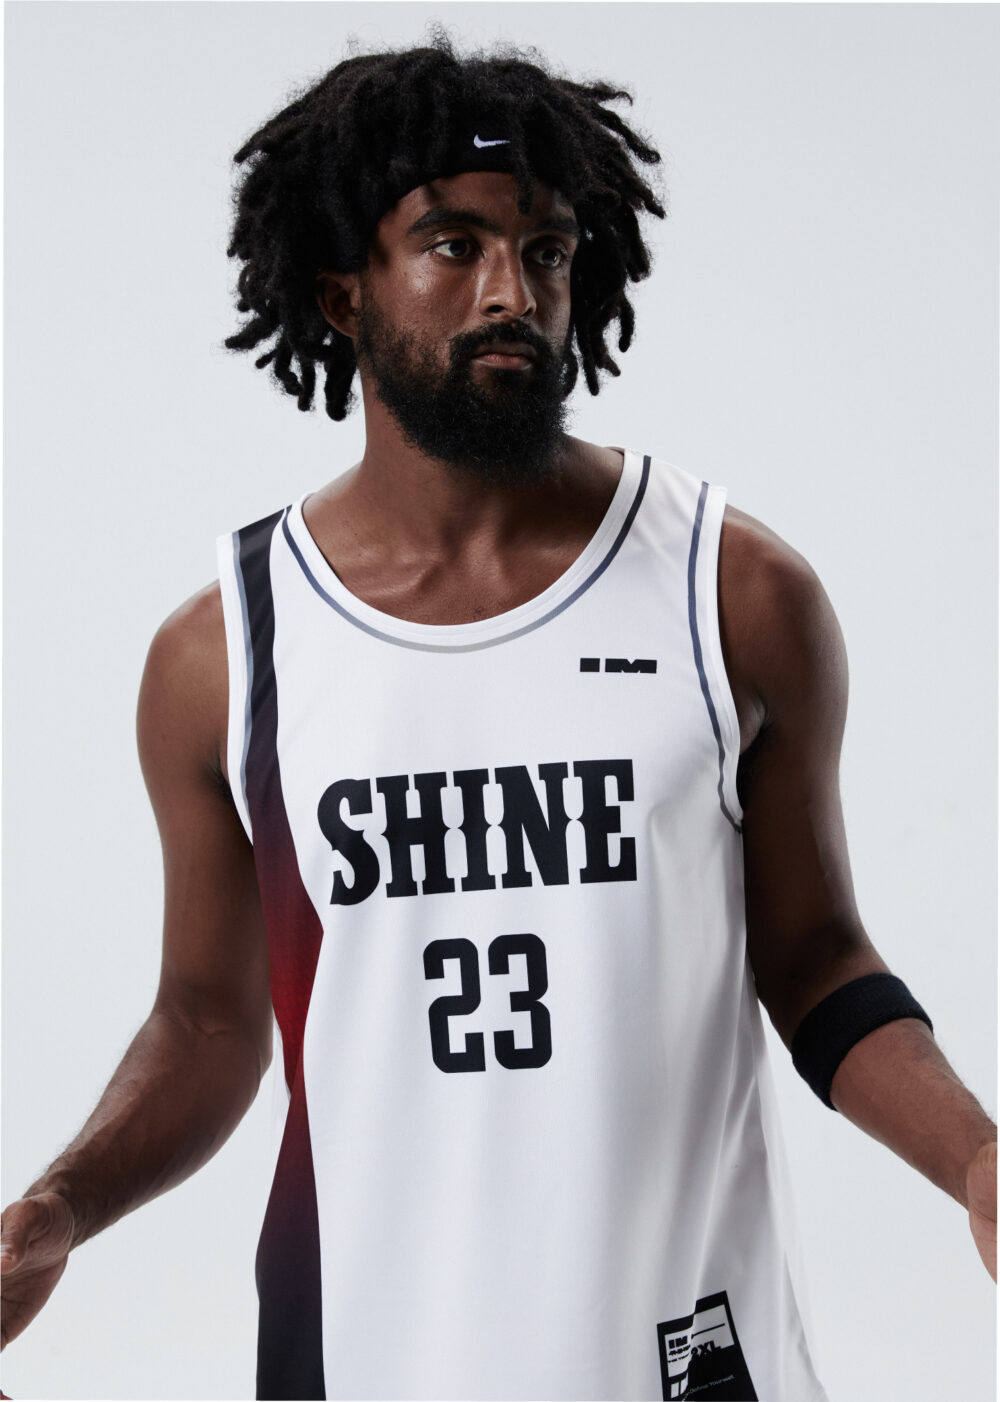 imbc-客製化籃球衣-籃球衣訂做